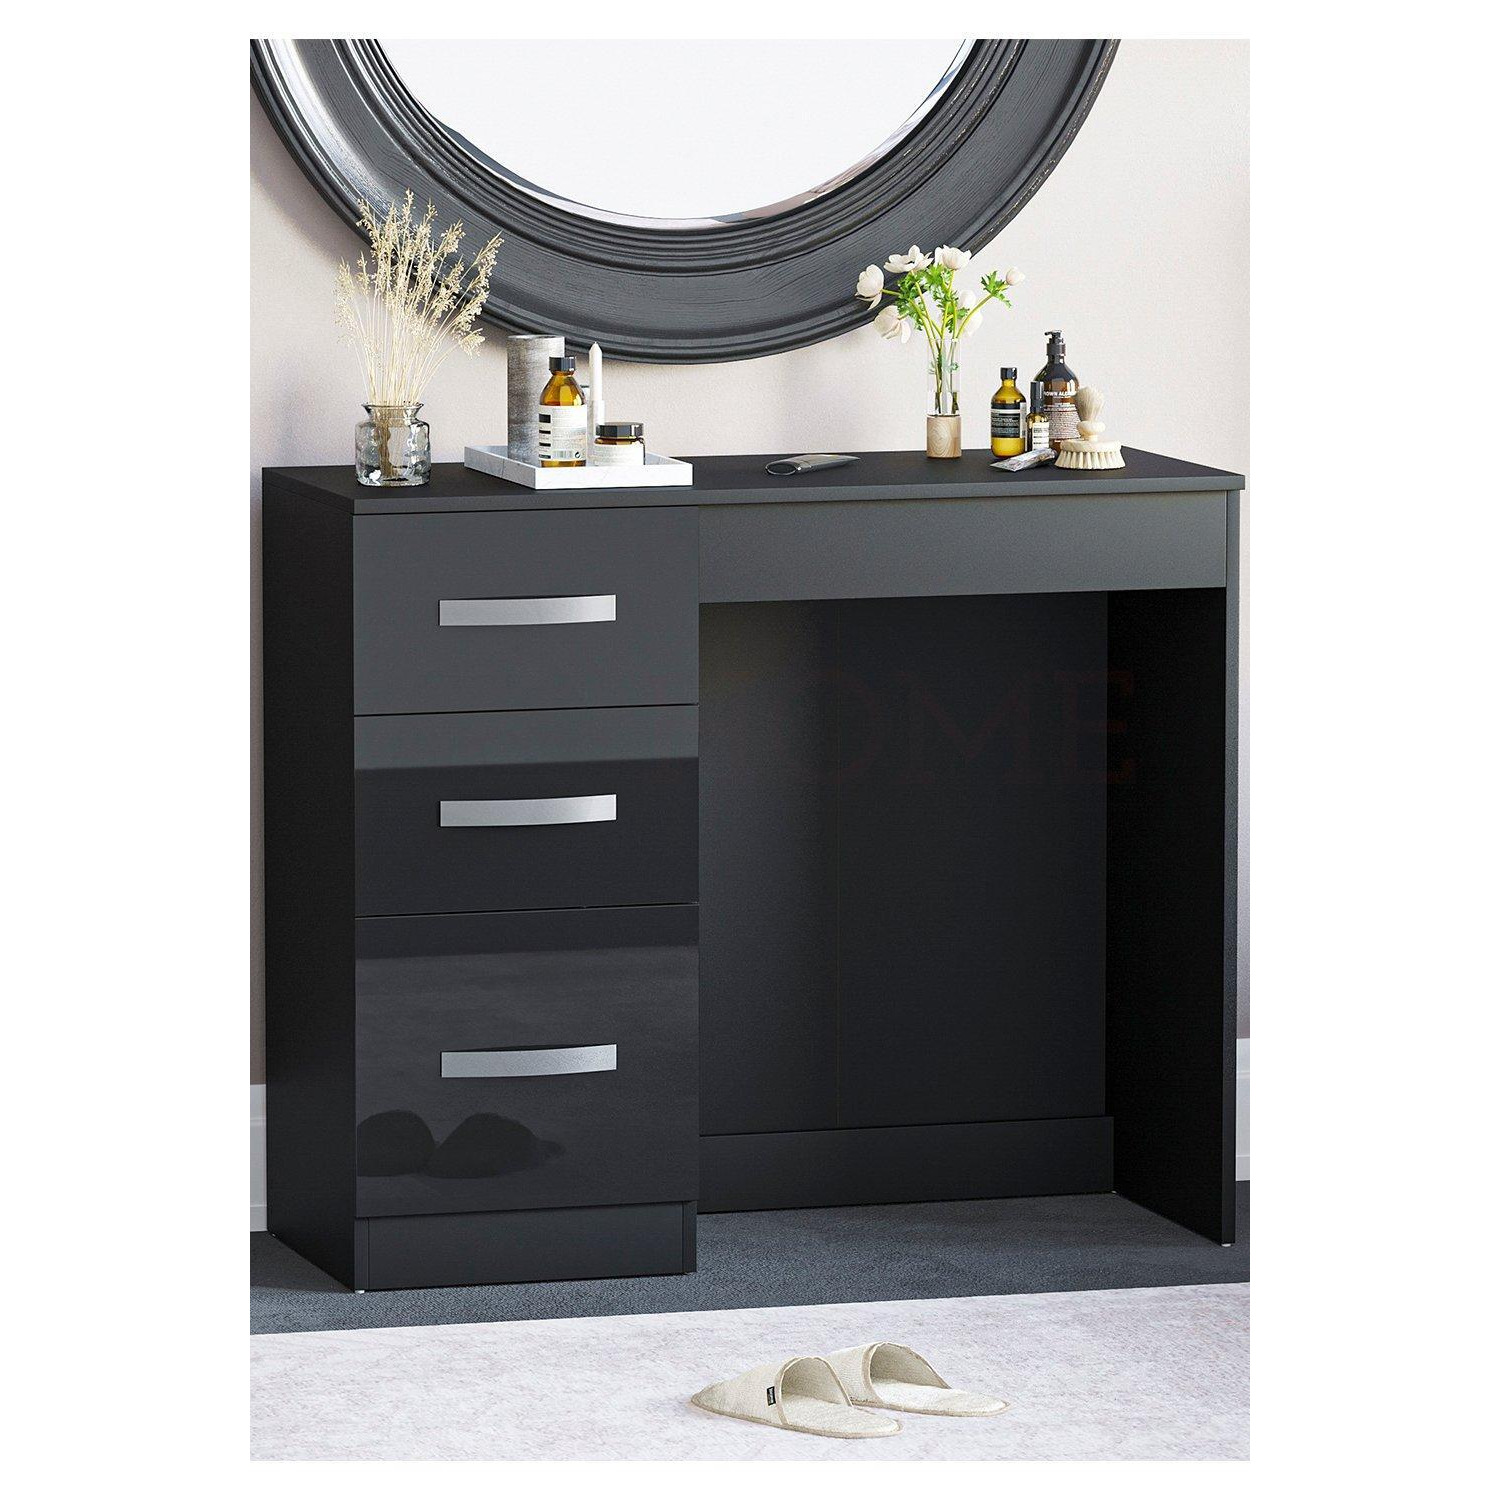 Vida Designs Hulio Dressing Table Storage Furniture MDF 790 x 930 x 380 mm - image 1